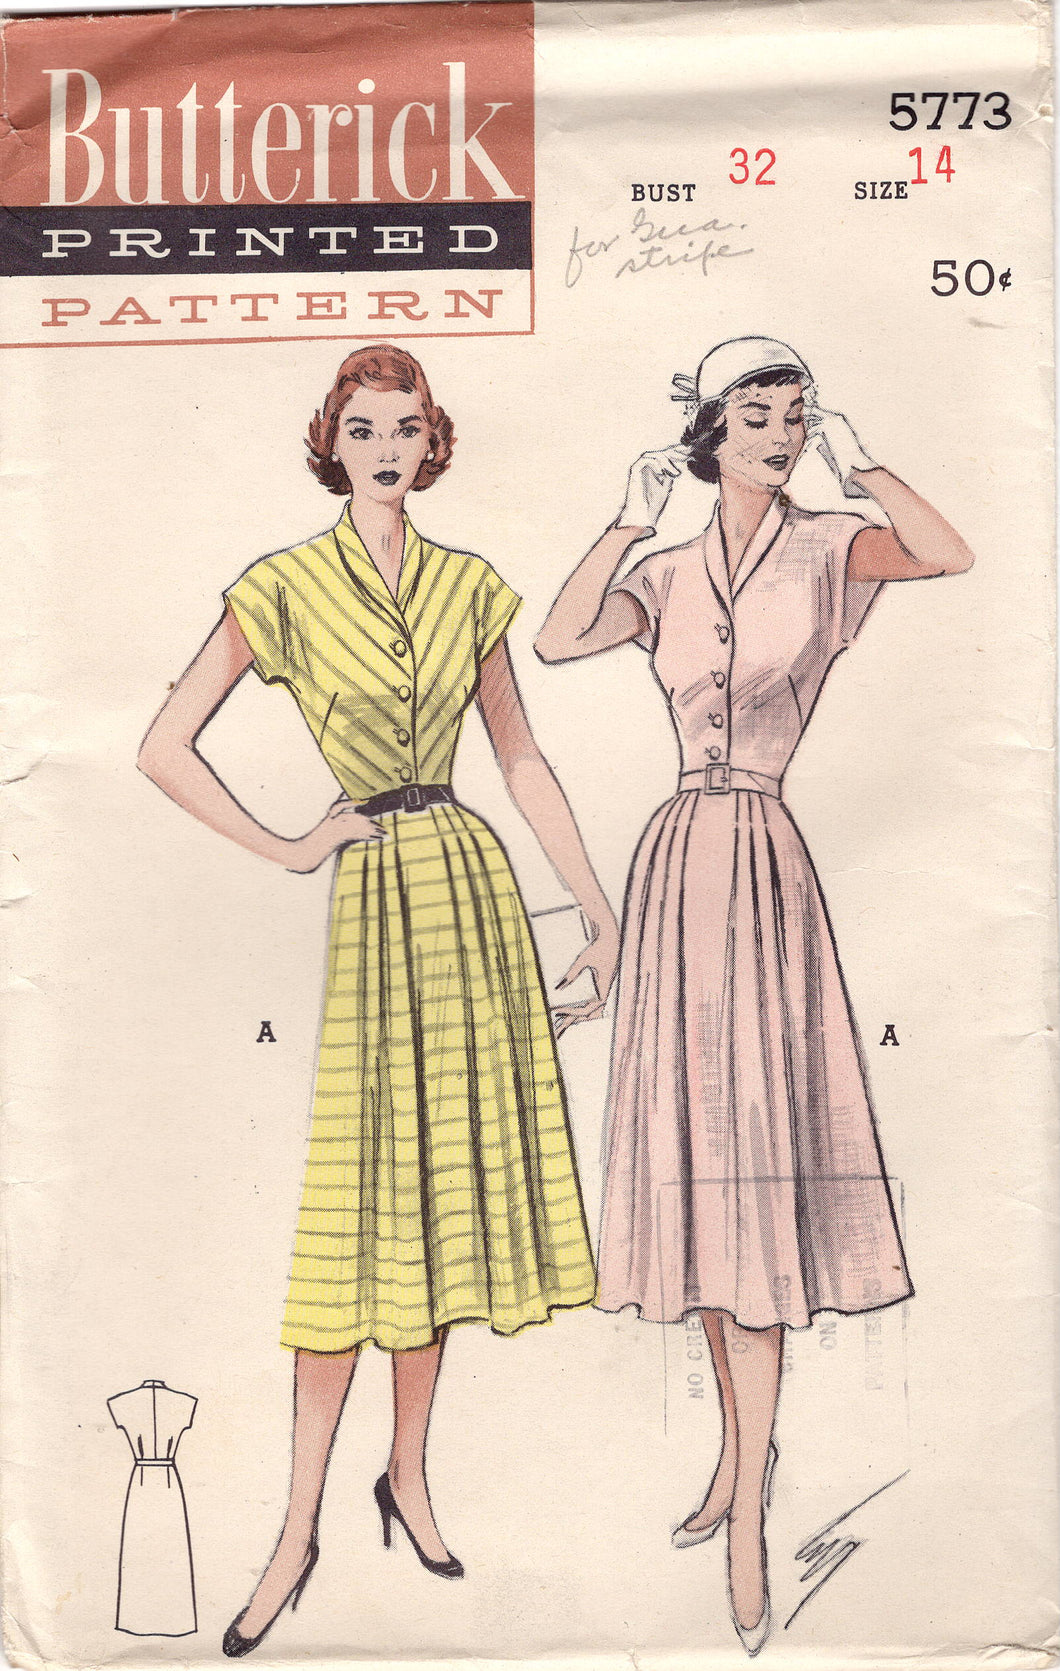 1950's Butterick Shirtwaist Dress Pattern with Short Sleeve and Rolled Collar - Bust 32